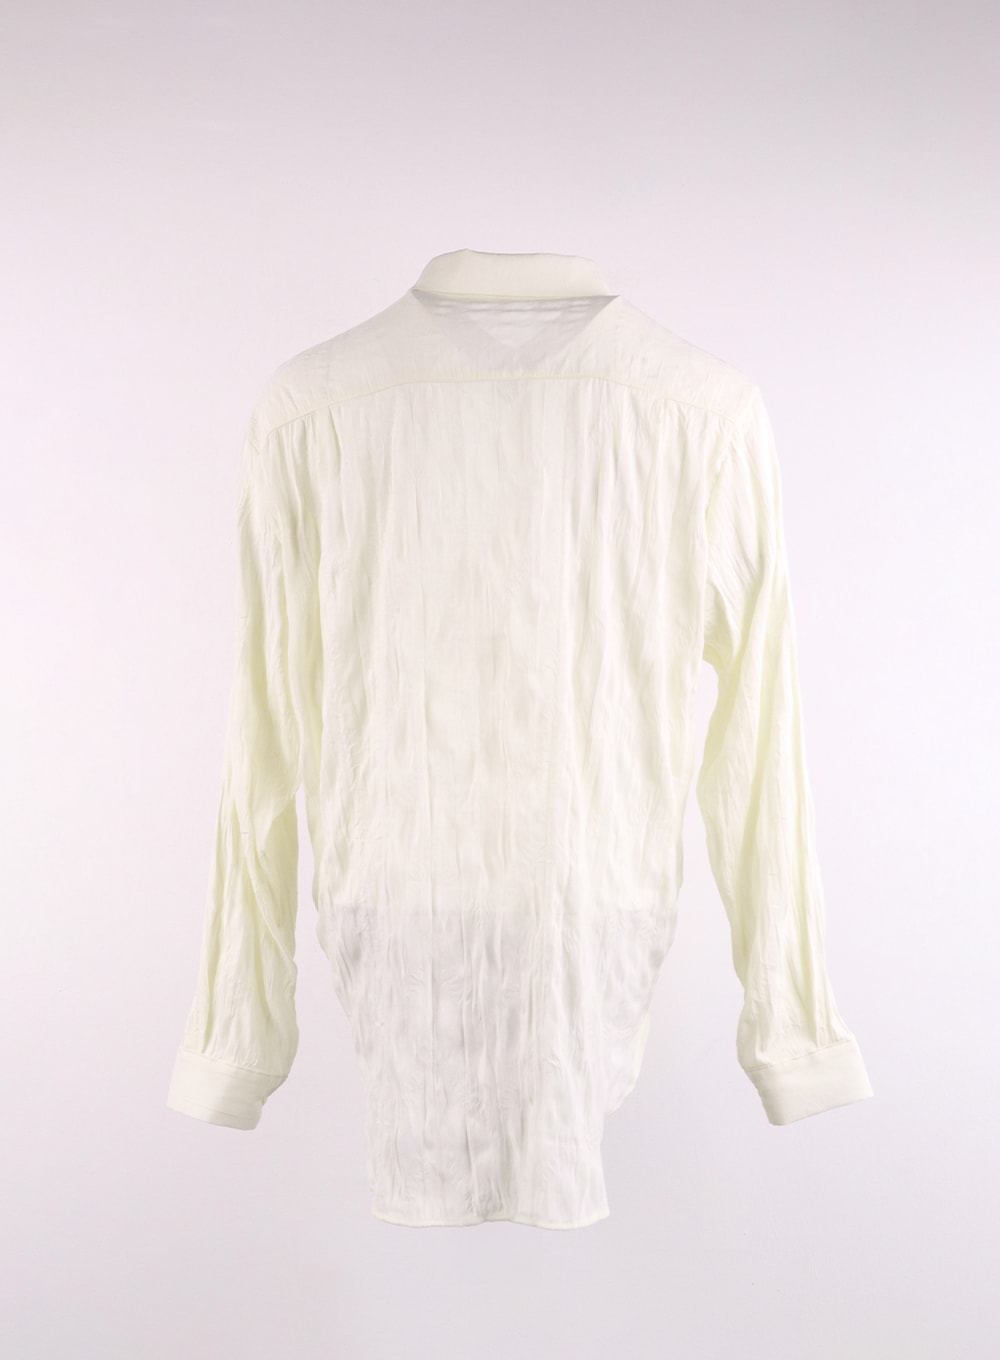 wrinkled-button-long-sleeve-blouse-cj425